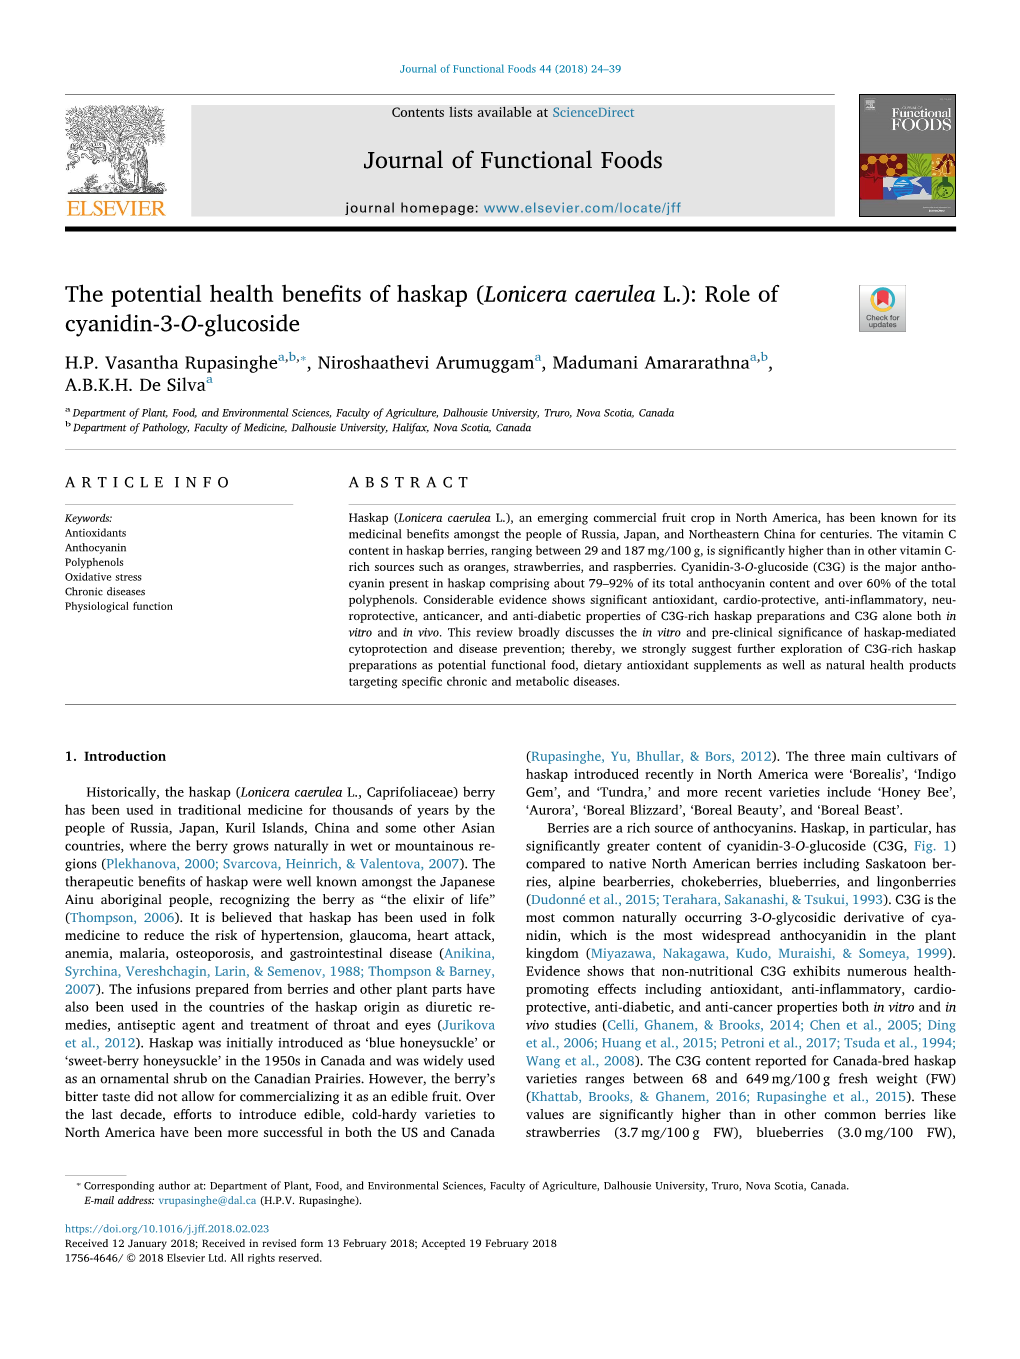 The Potential Health Benefits of Haskap (Lonicera Caerulea L.) Role of Cyanidin-3-O-Glucoside